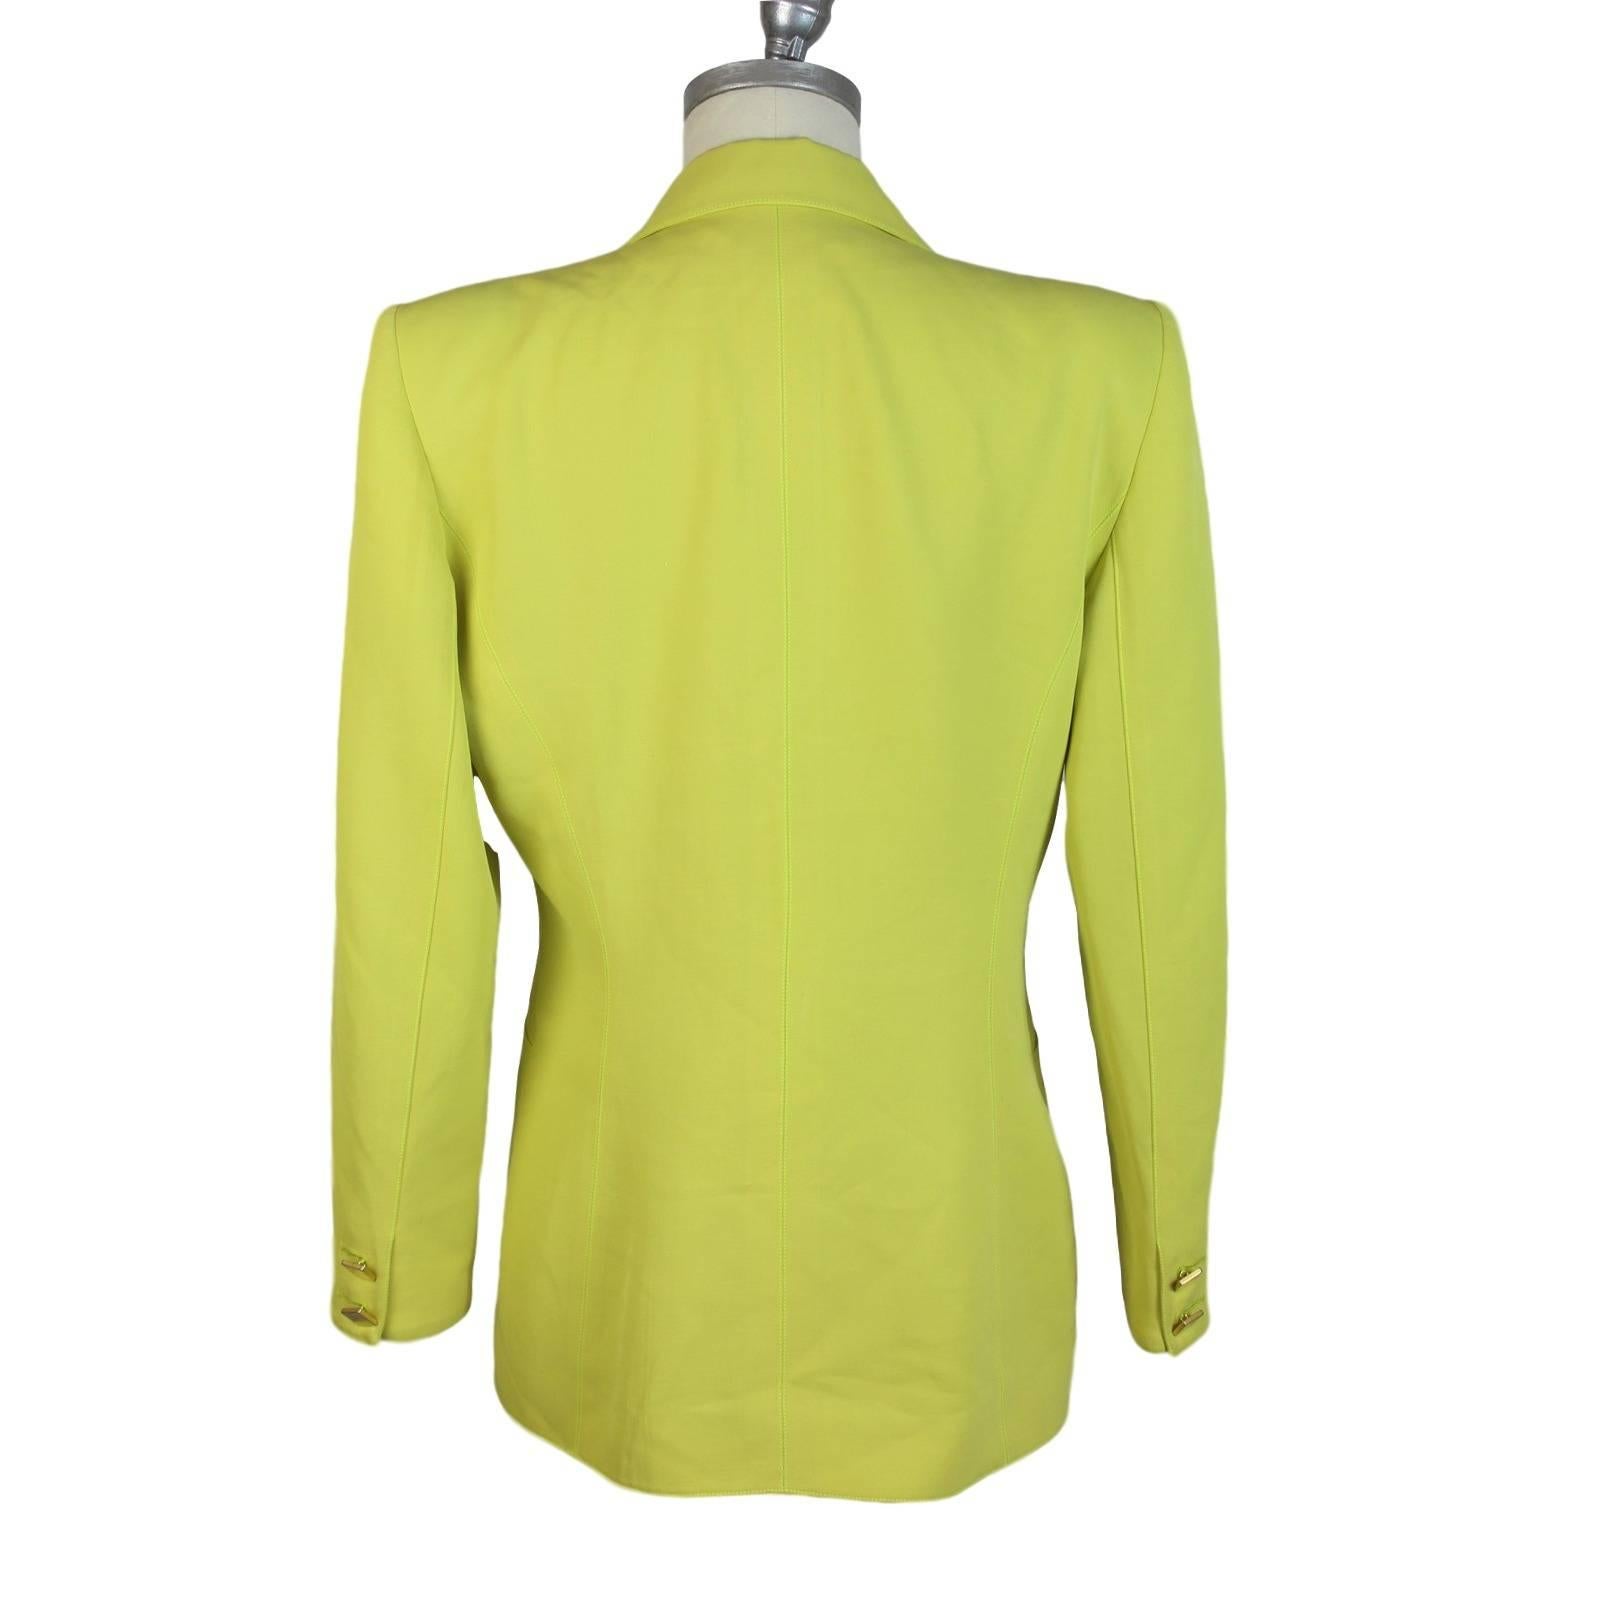 Green 1980s Claude Montana yellow cotton blazer jacket For Sale